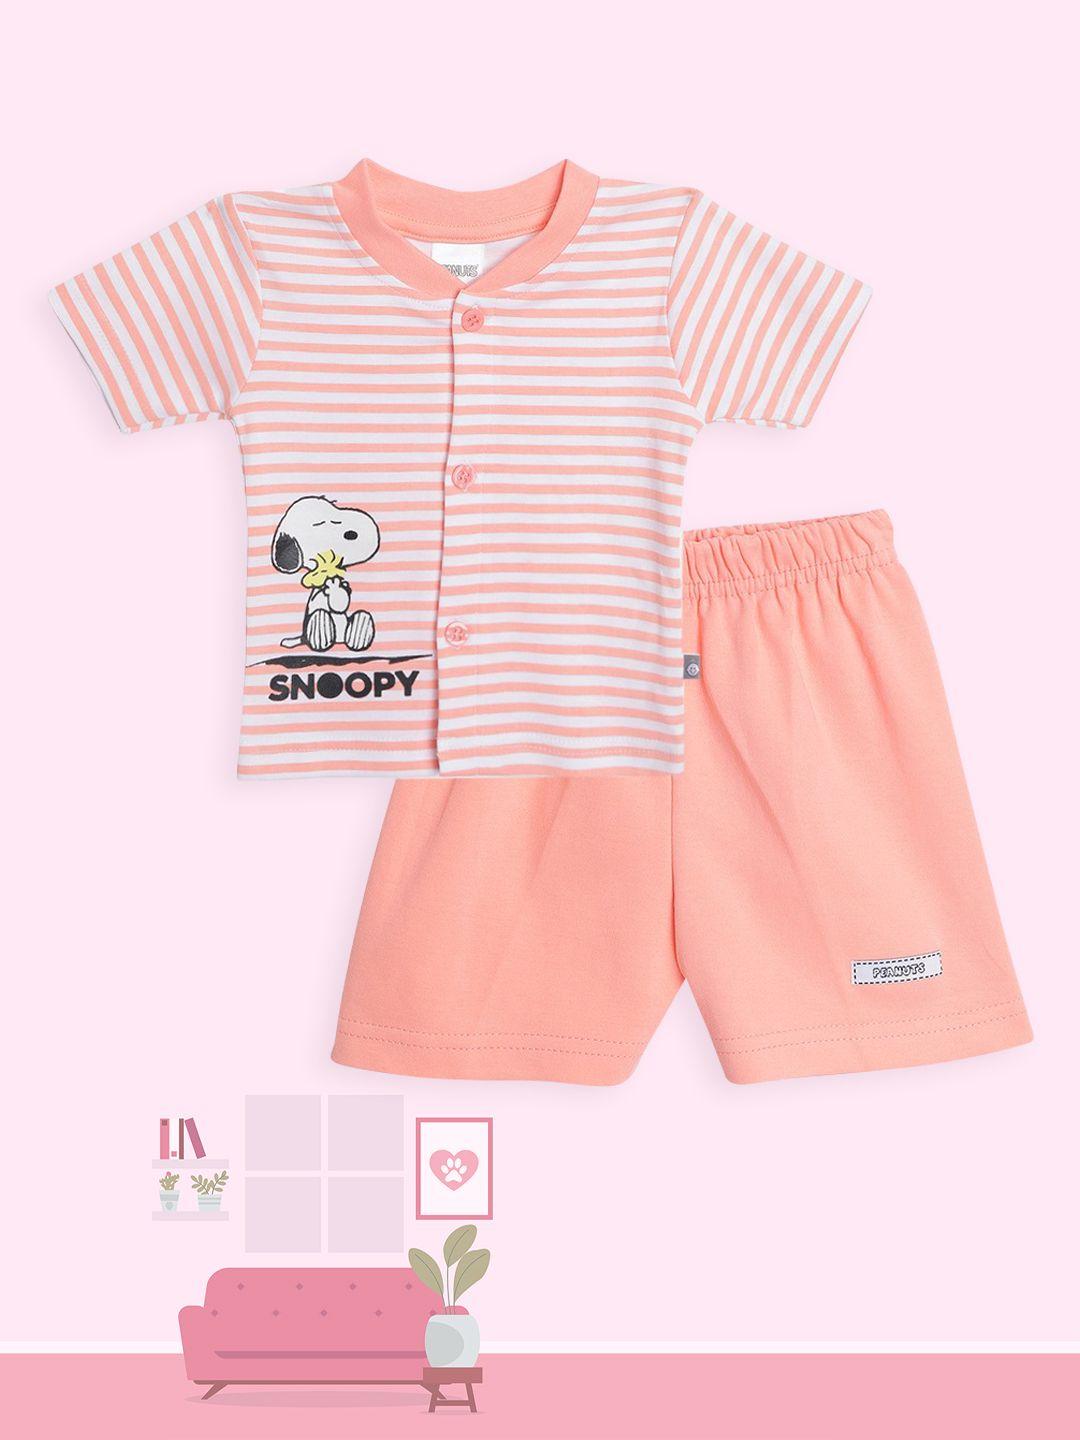 TINYO Infant White & Peach-Coloured Striped Snoopy Print Cotton Clothing Set